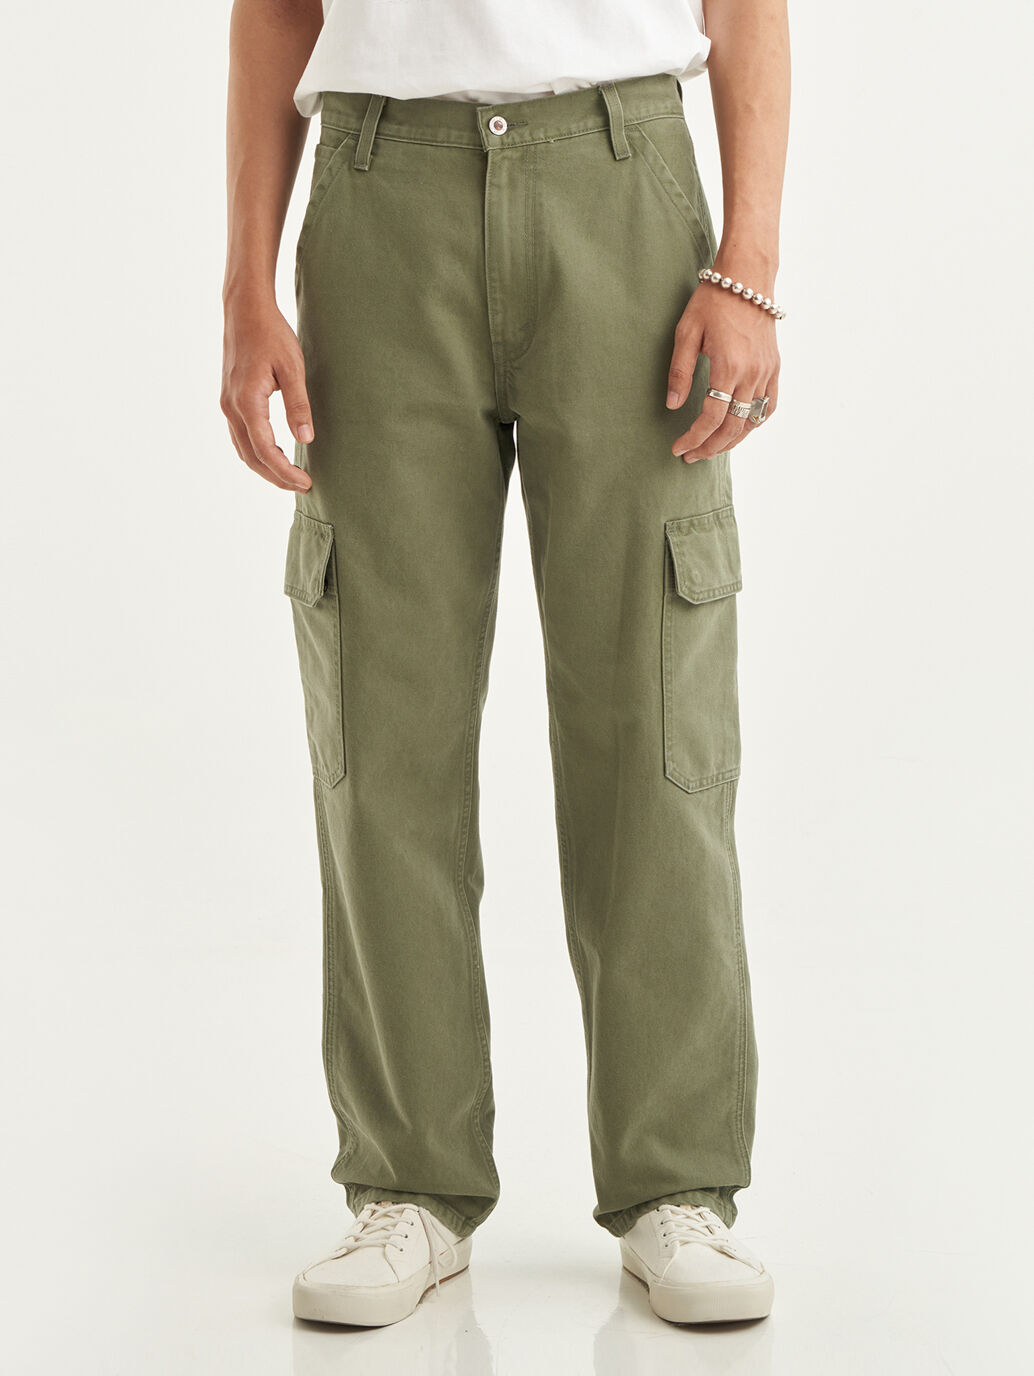 Green Loose Cargo Pants For Men - Levi's® SilverTab™ Range